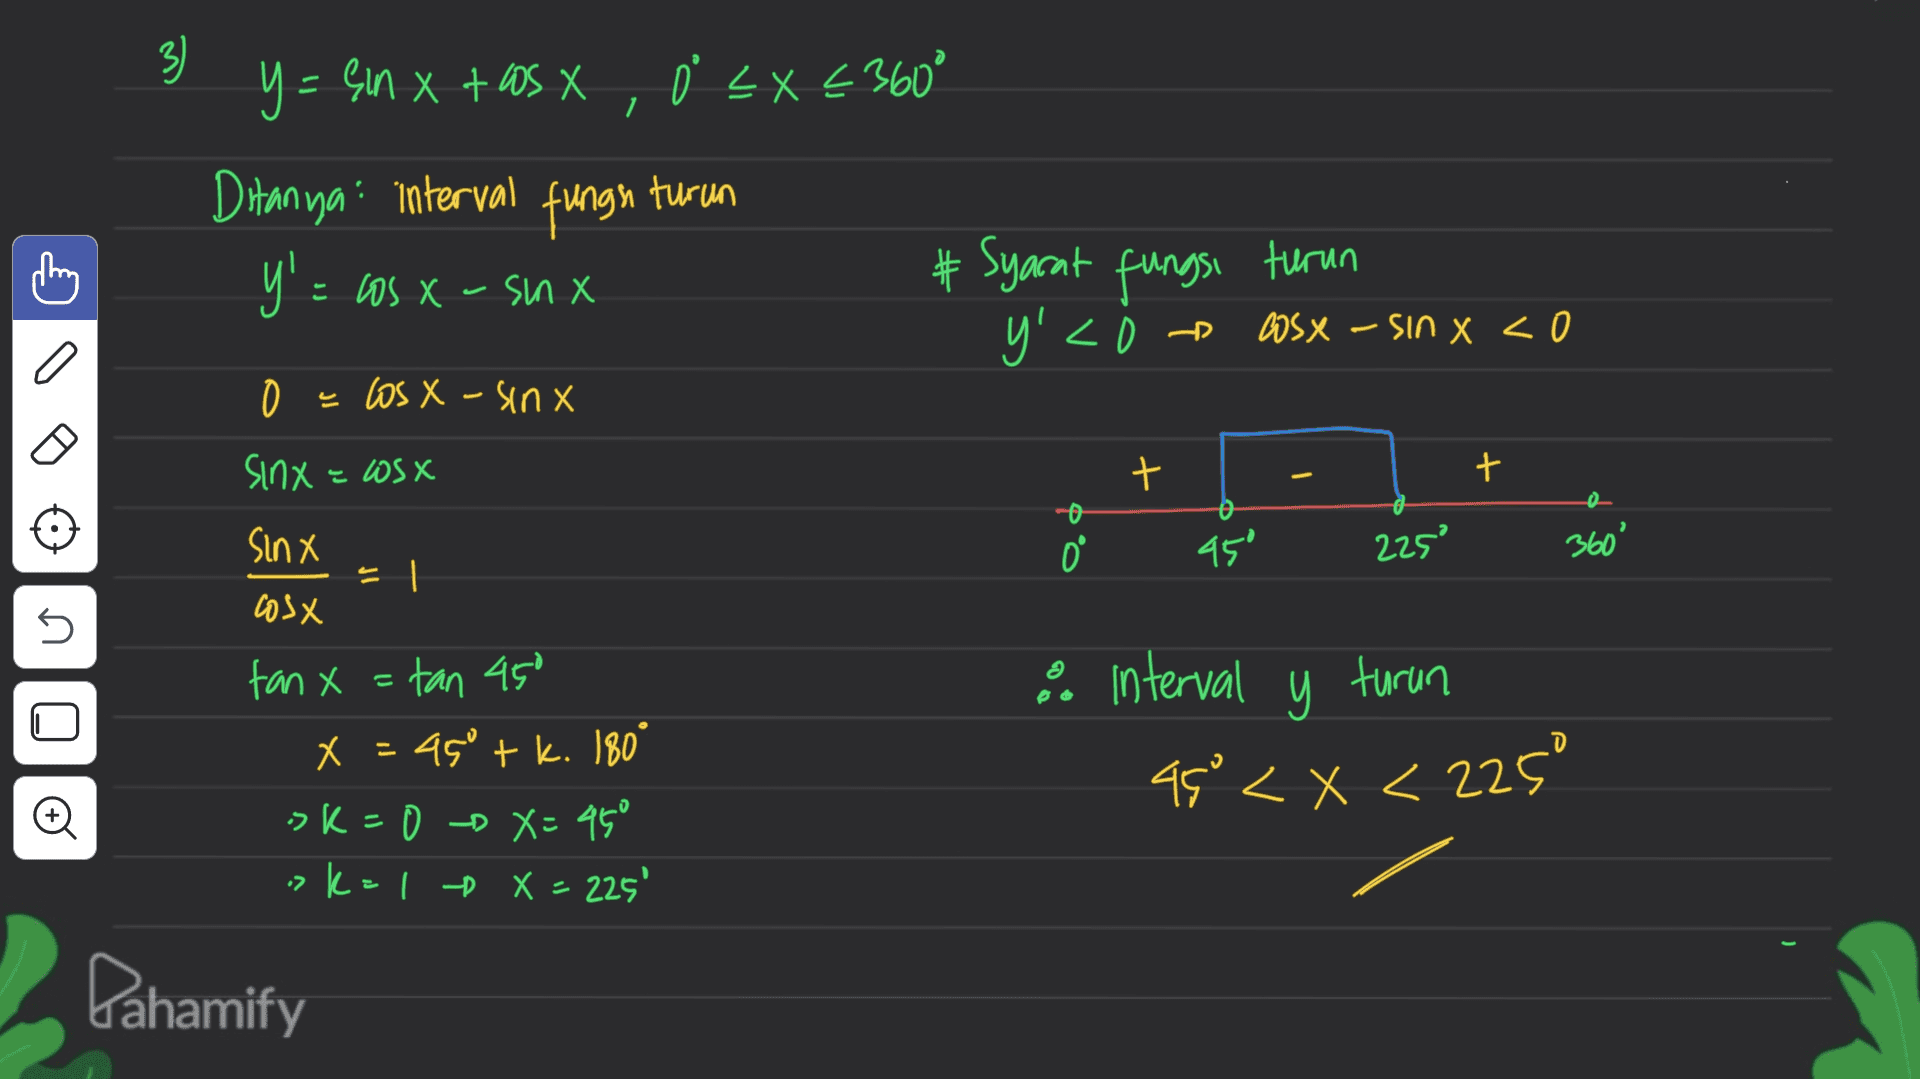 7 3) y = ein x + as X , 0 < x < 360° x X o EX€ Ditanya interval fungh turun y'=1 = cos x - snx #Syarat fungsi turun Bosx - Sin x < 0 y'< e los X - sinx XSCI 3 XUIS + + Sinx 0 45° 225 360° | = cosx n. - fan x = tan 450 X x = 45° + k. 180° tk sk=0 - X= 45° > k=1 X = 225' & interval y turun 49° < x < 225° - © D Pahamify 